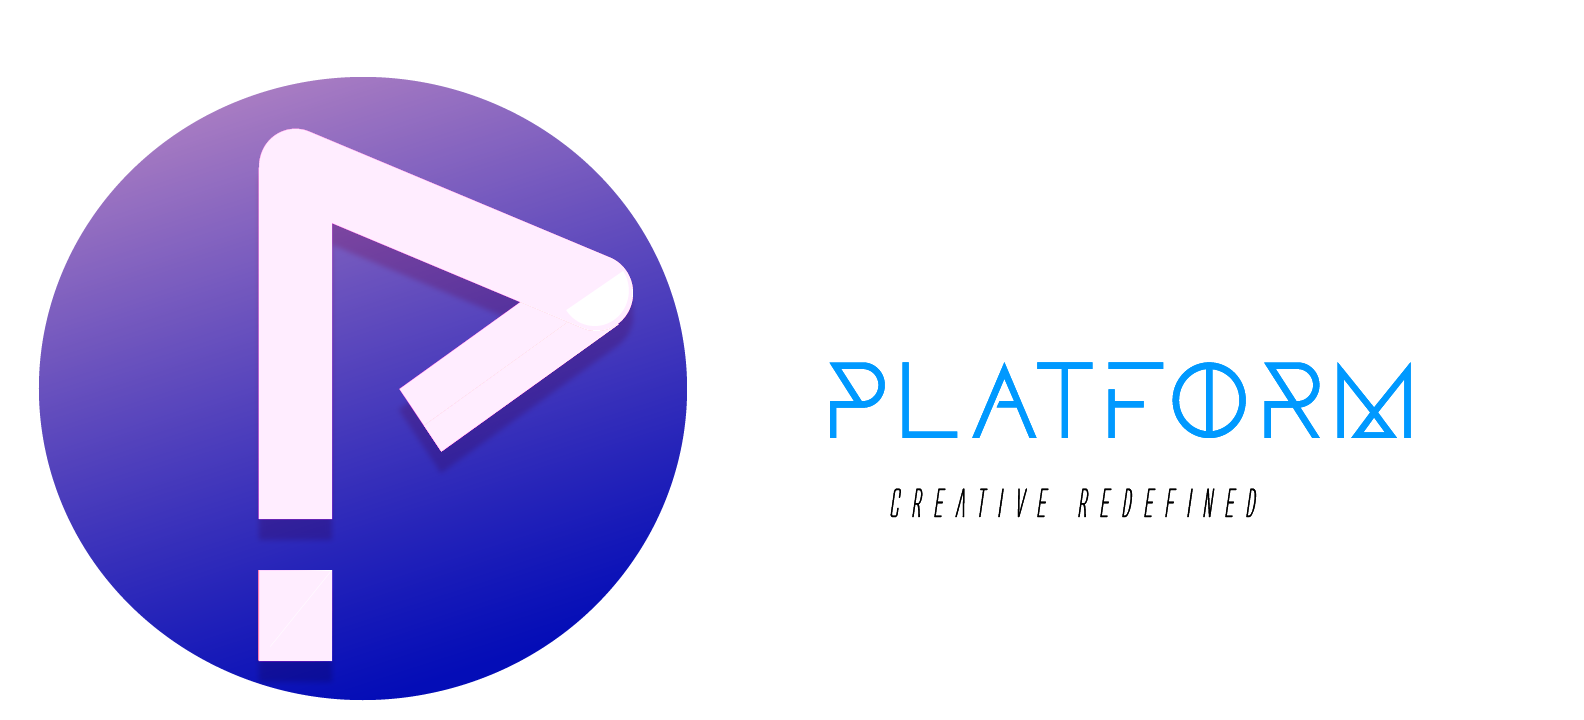 Platform Digital Marketing Agency Logo